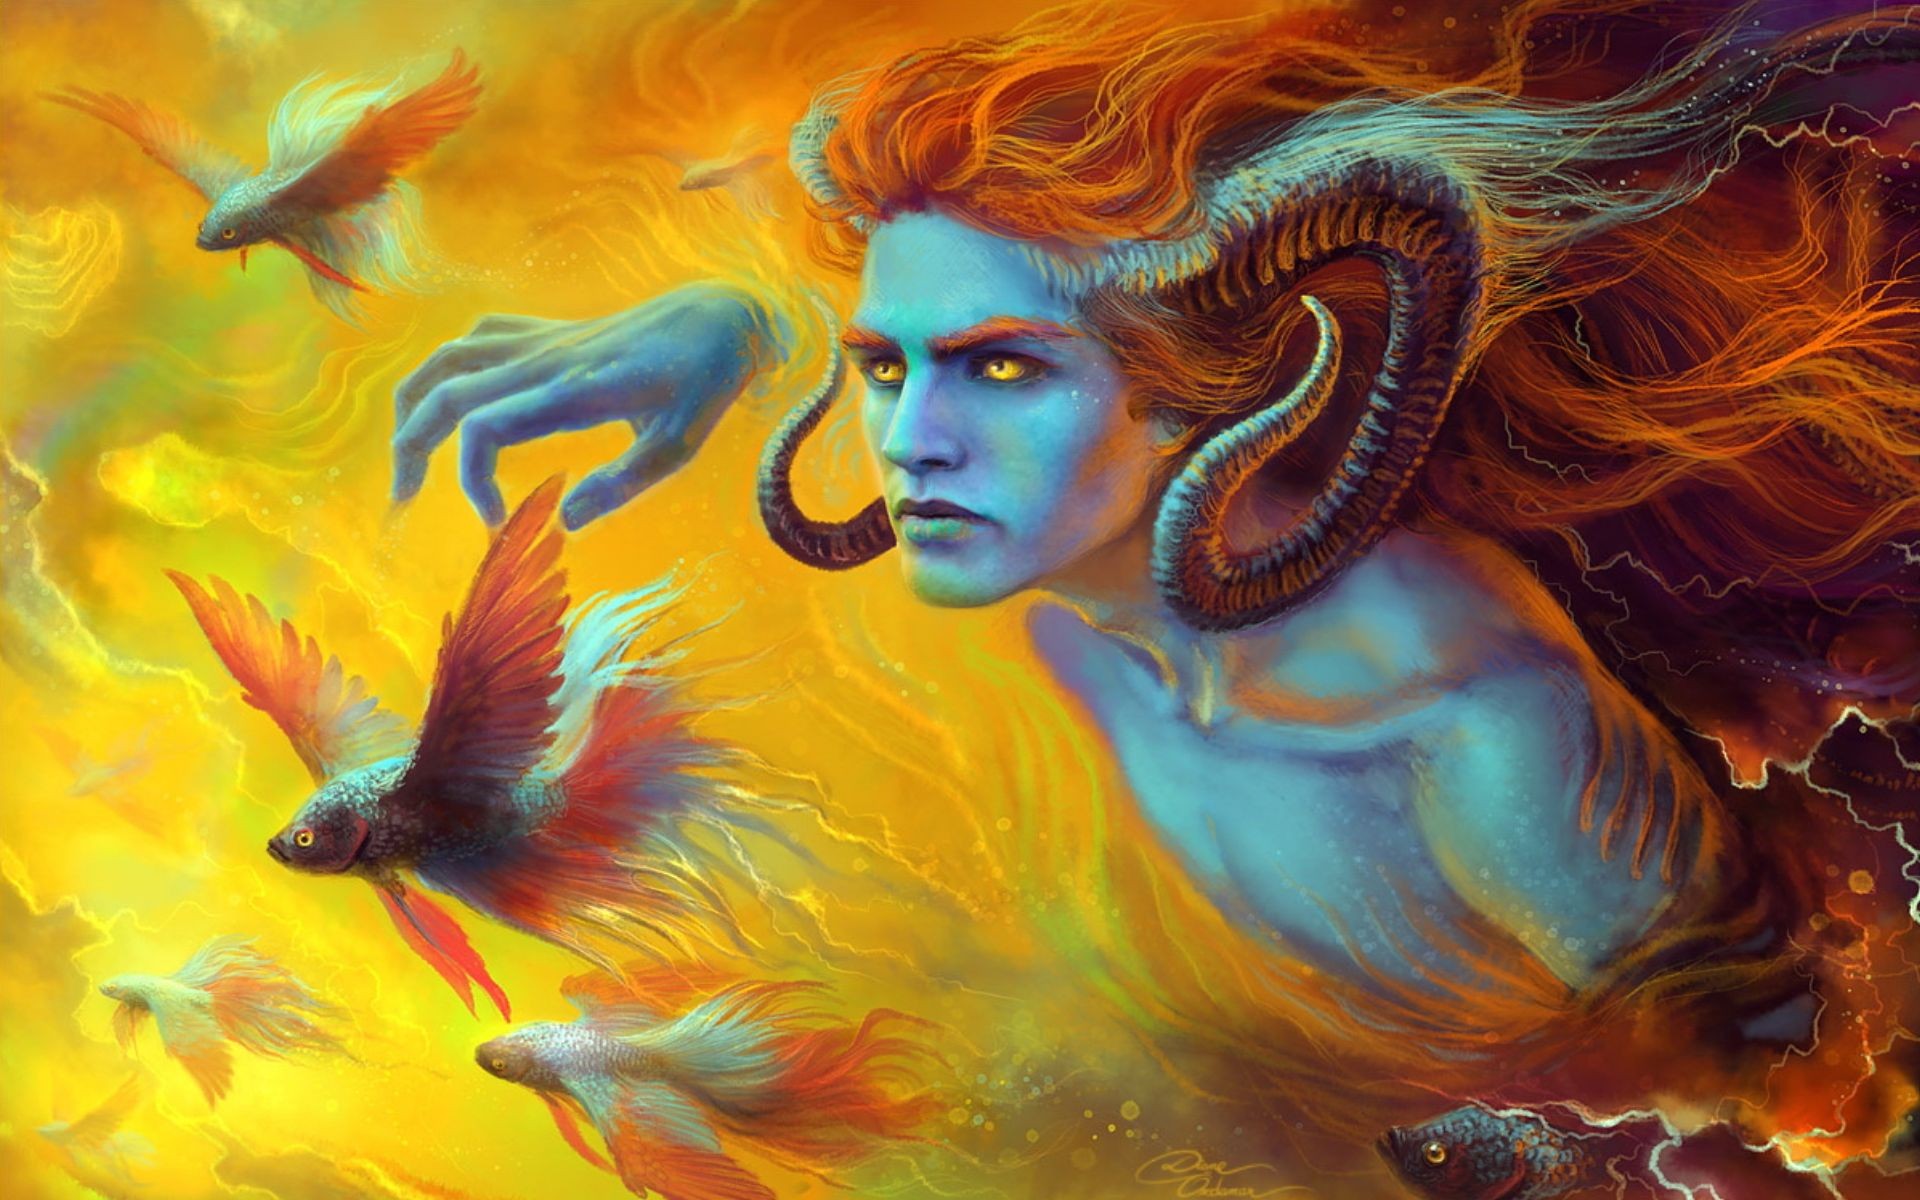 Fantasy demon artwork by Diane Özdamar, featuring a mesmerizing and otherworldly creature.